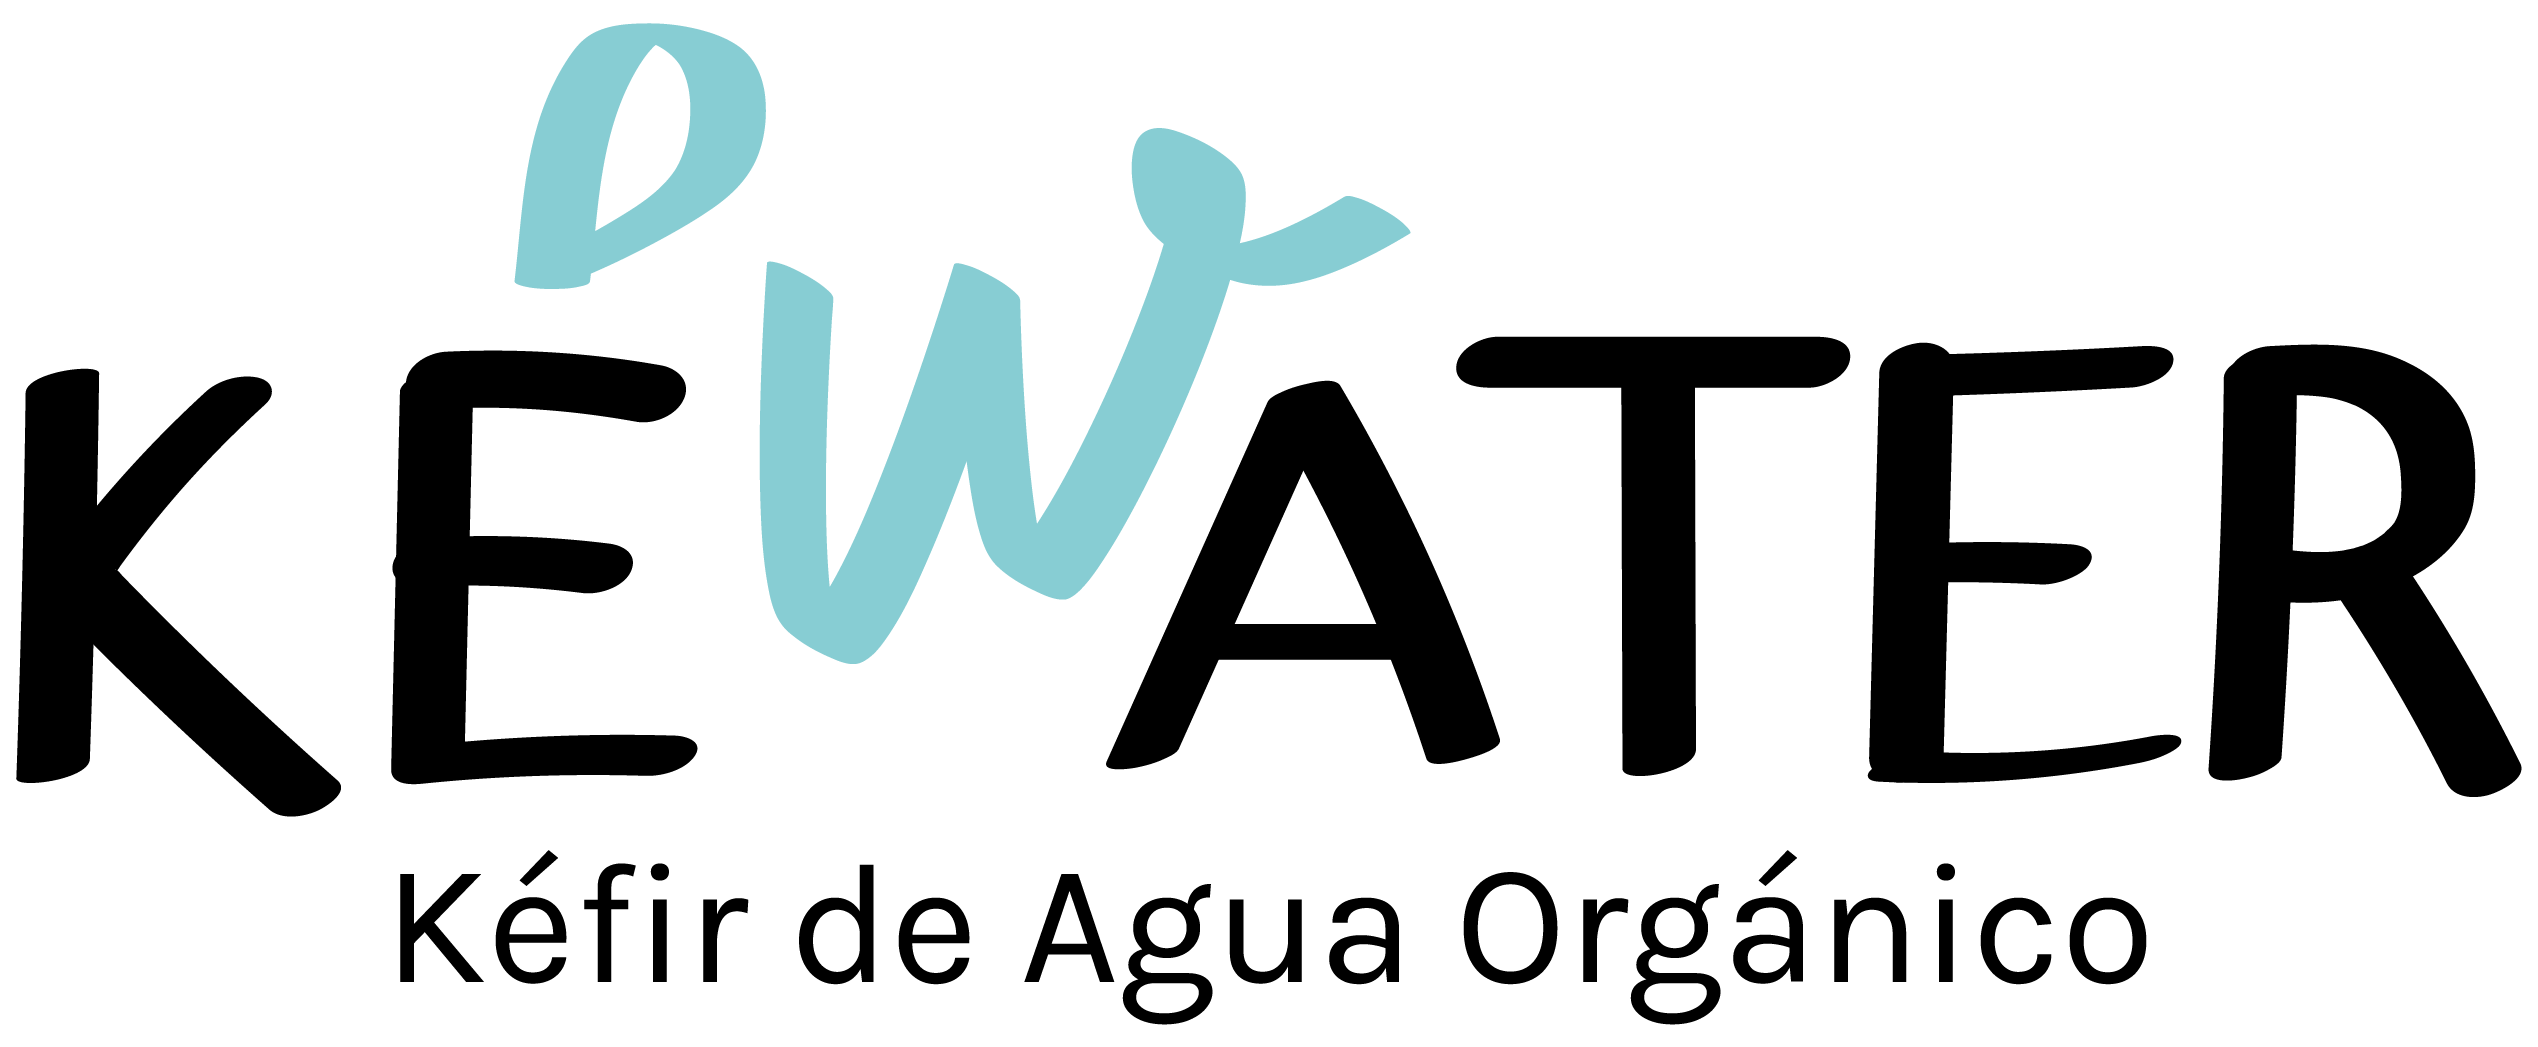 kéwaterdrinks_logo